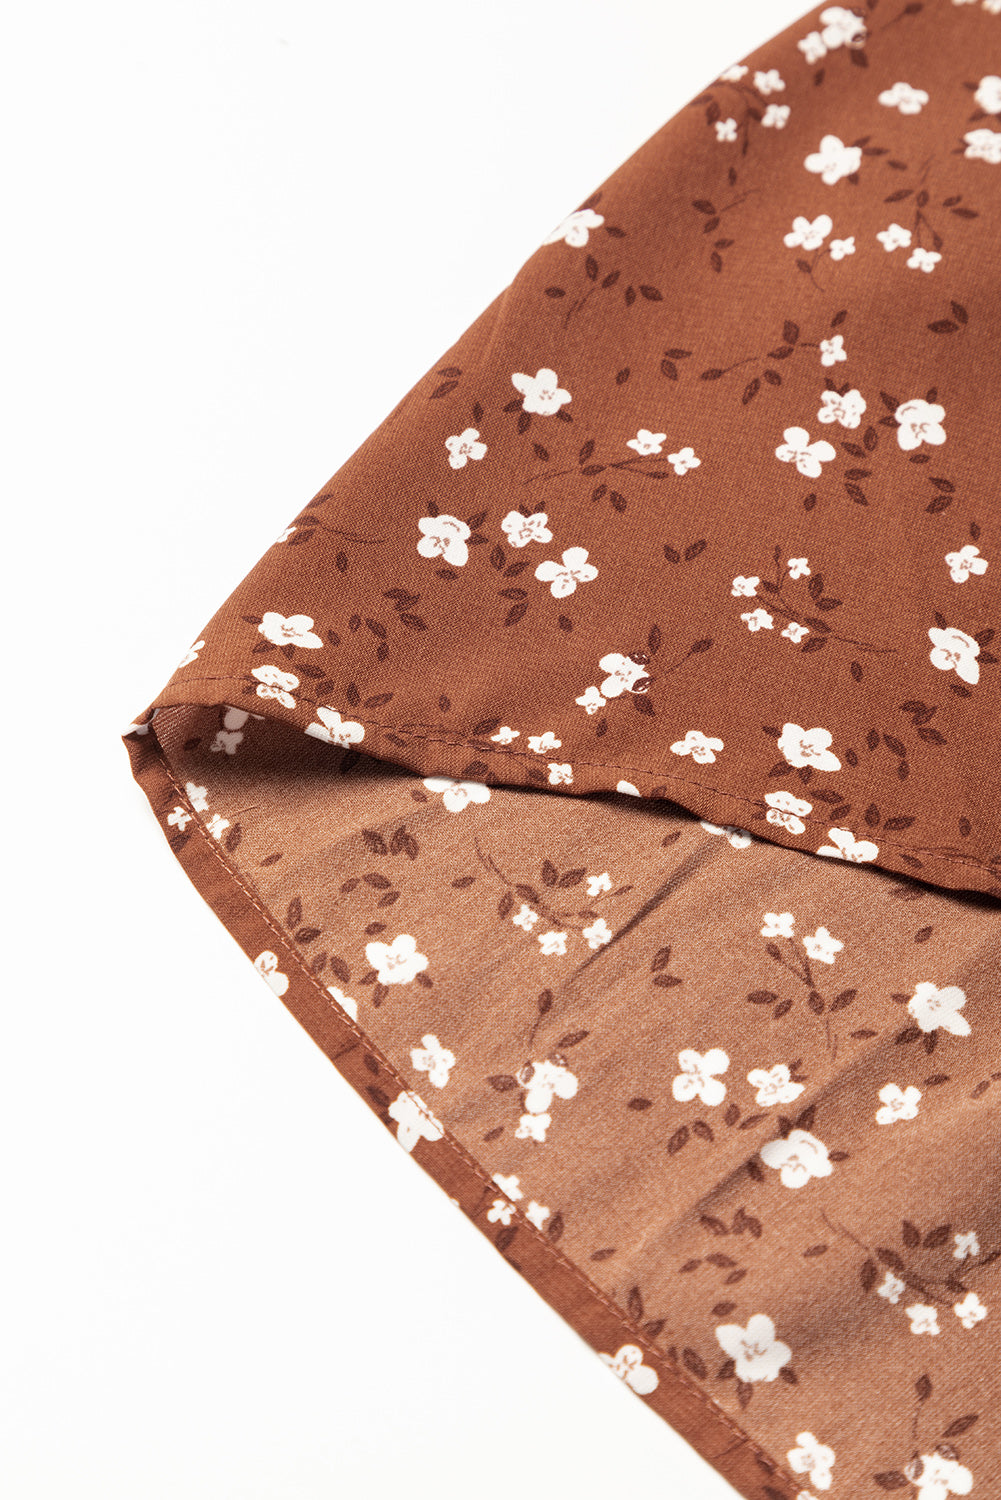 Chestnut Floral Print 3/4 Sleeve Midi Dress